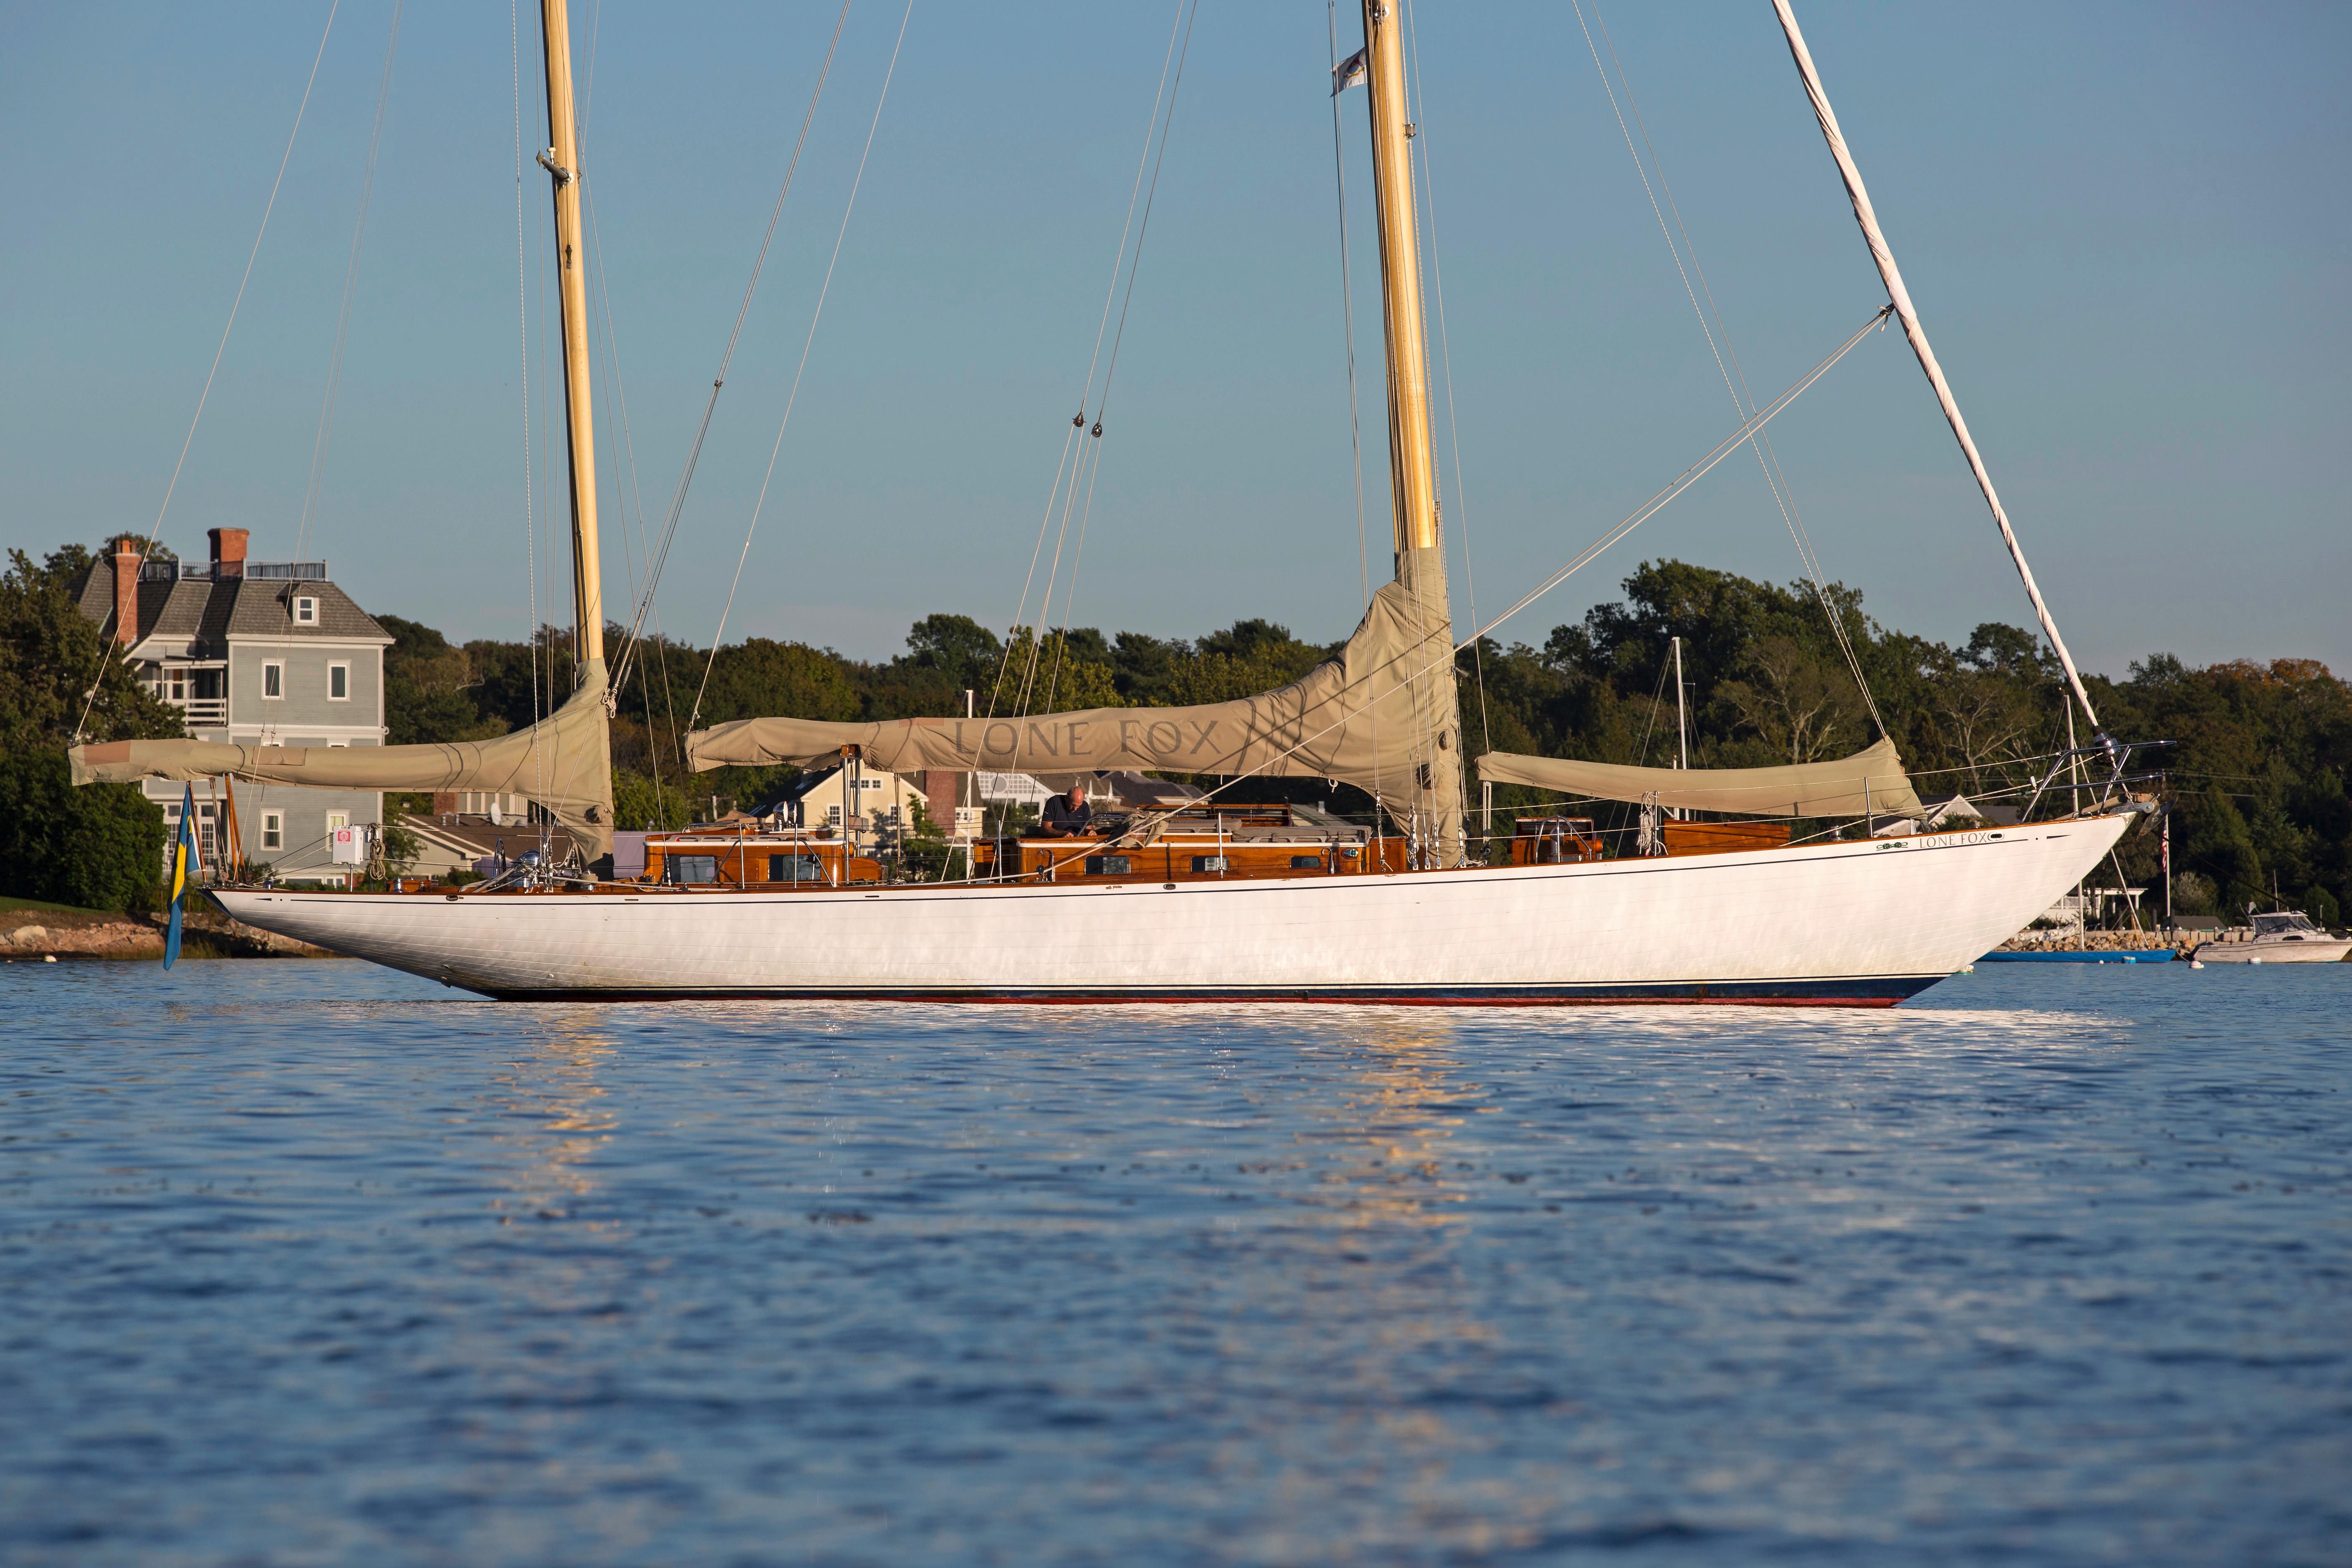 lone fox yacht for sale 65 robert clark yachts belfast, me denison yacht sales